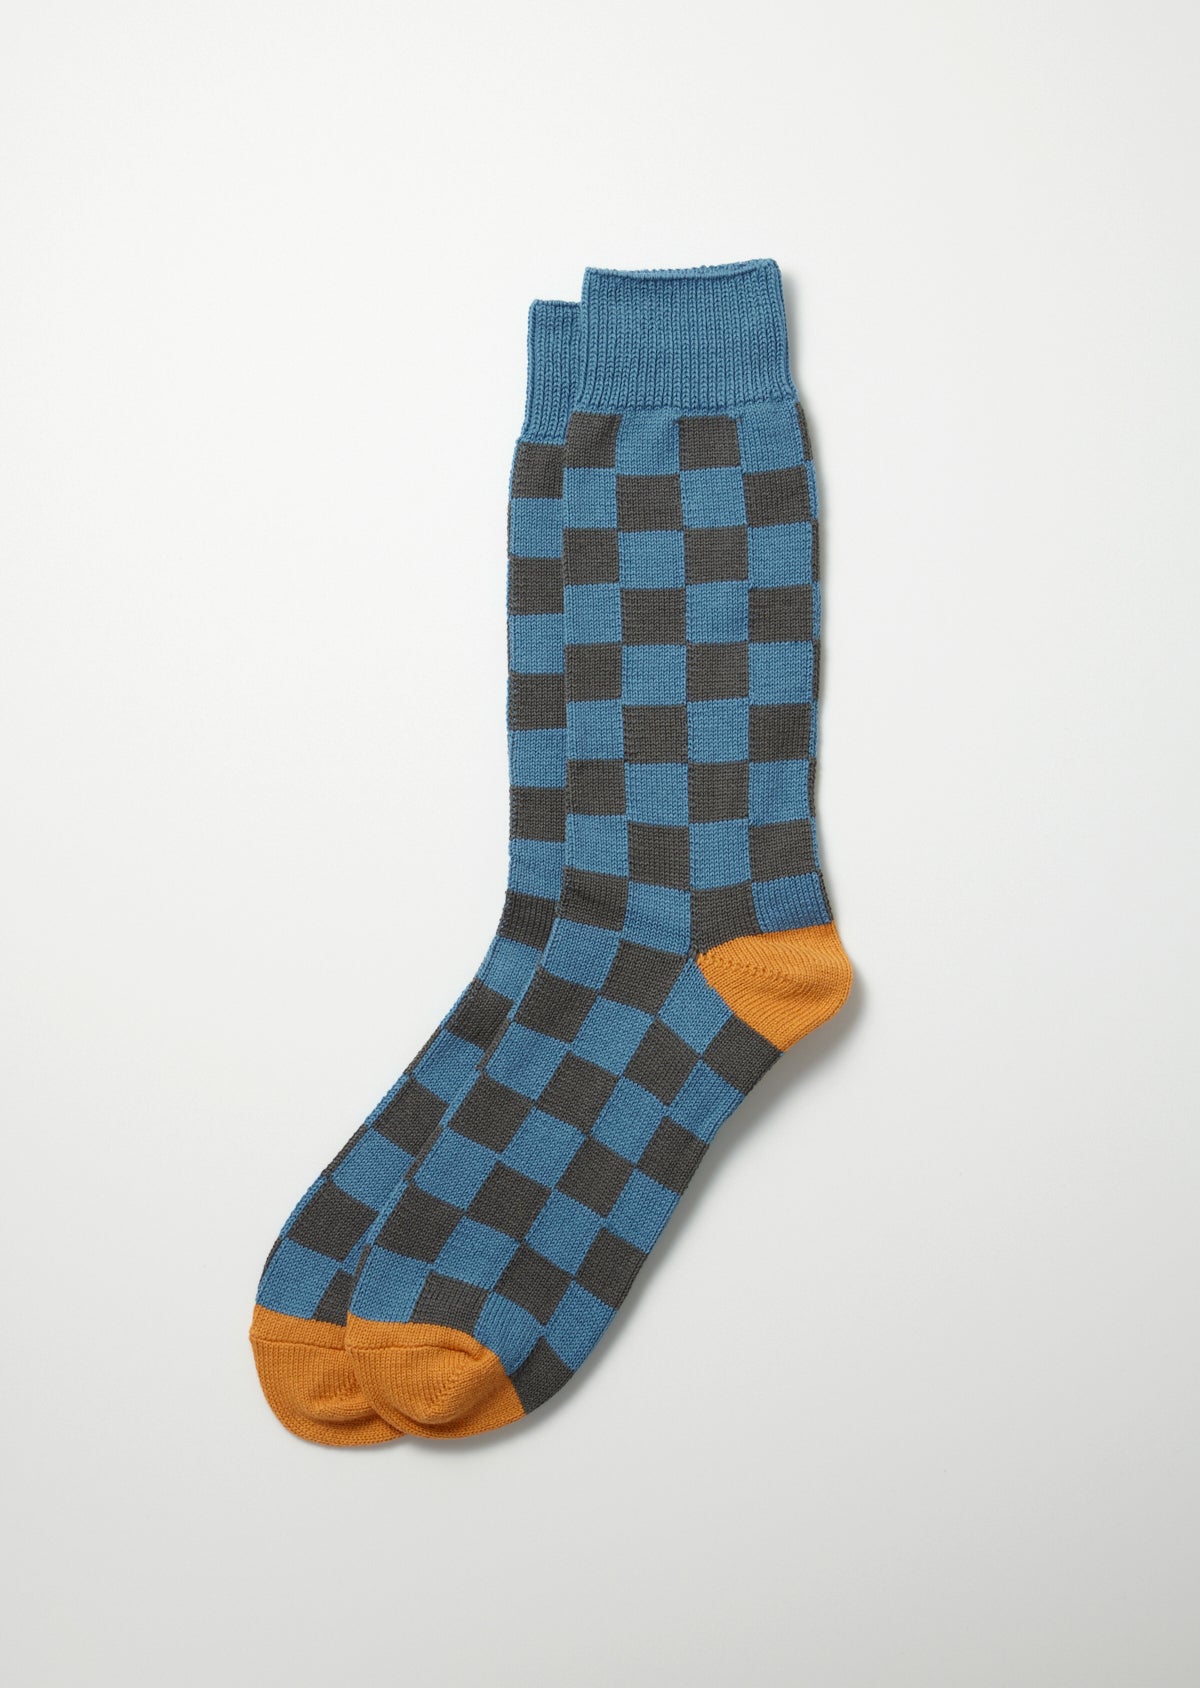 Schachbrett Socken - blau/grau